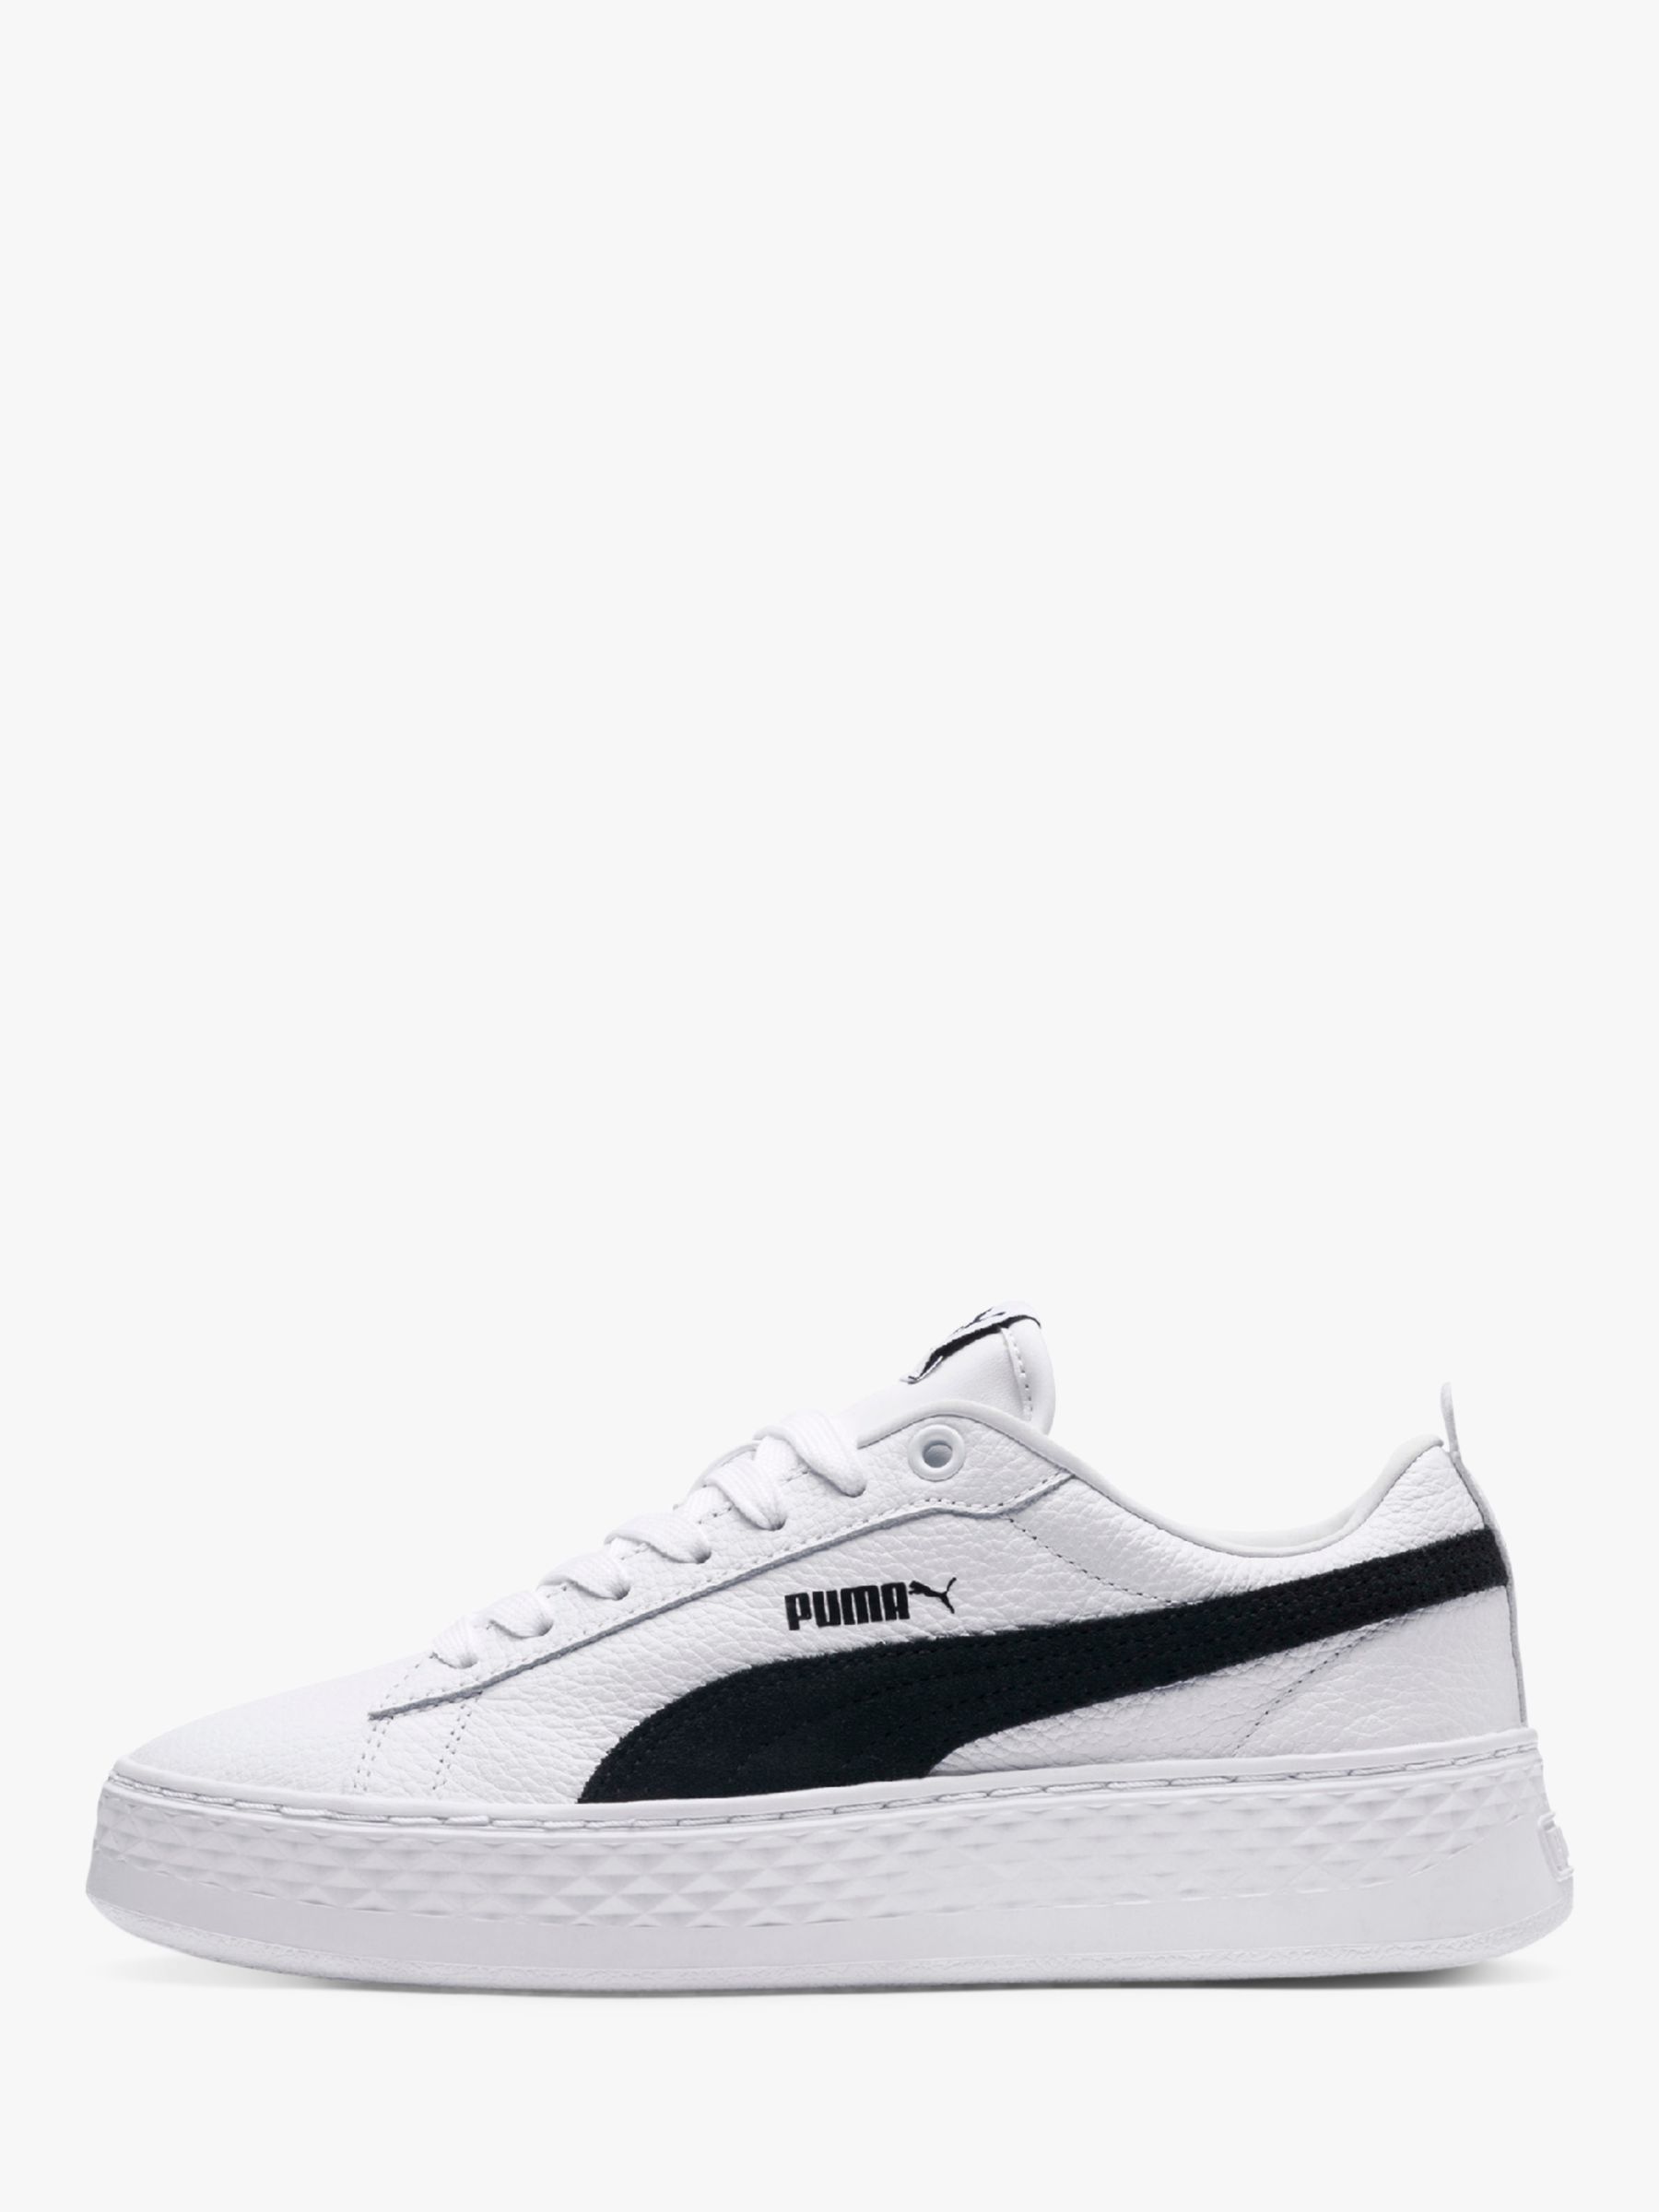 puma black and white womens shoes